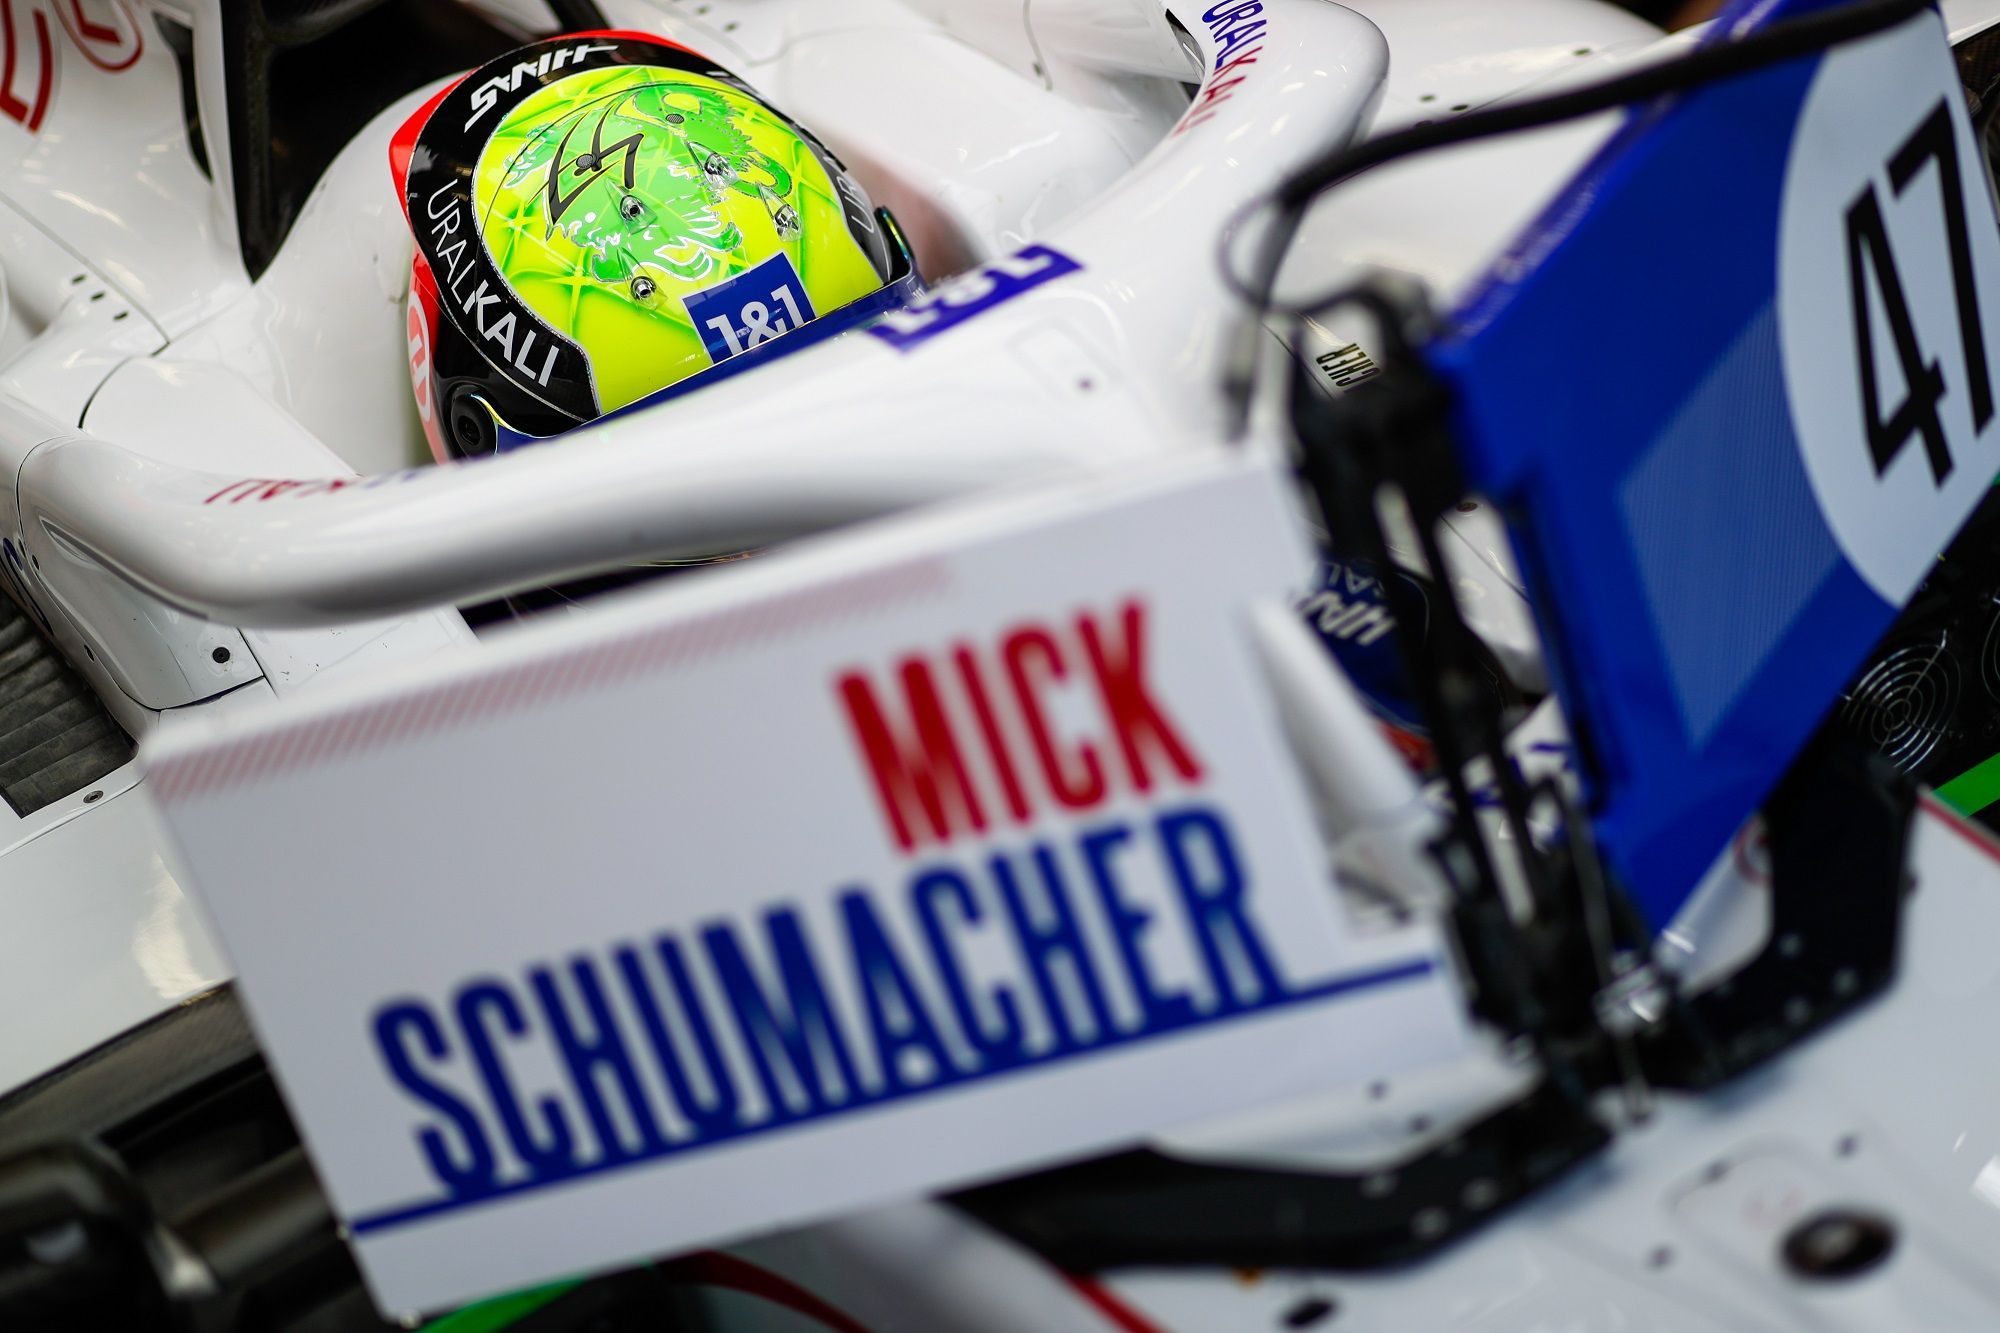 Mick Schumacher, F1